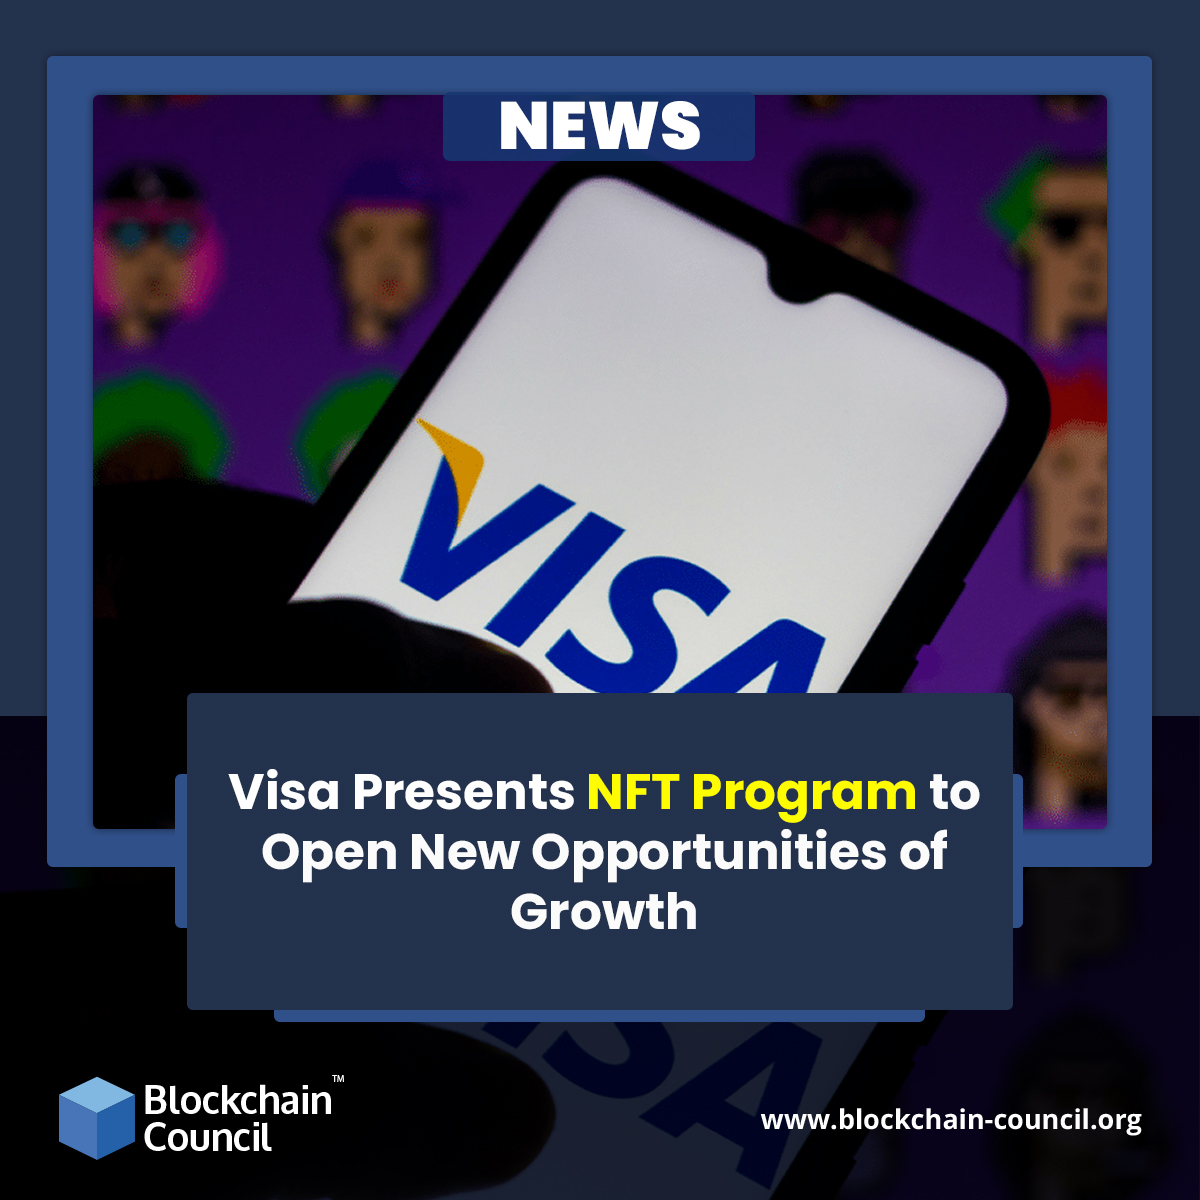 Visa Presents NFT Program to Open New Opportunities of Growth